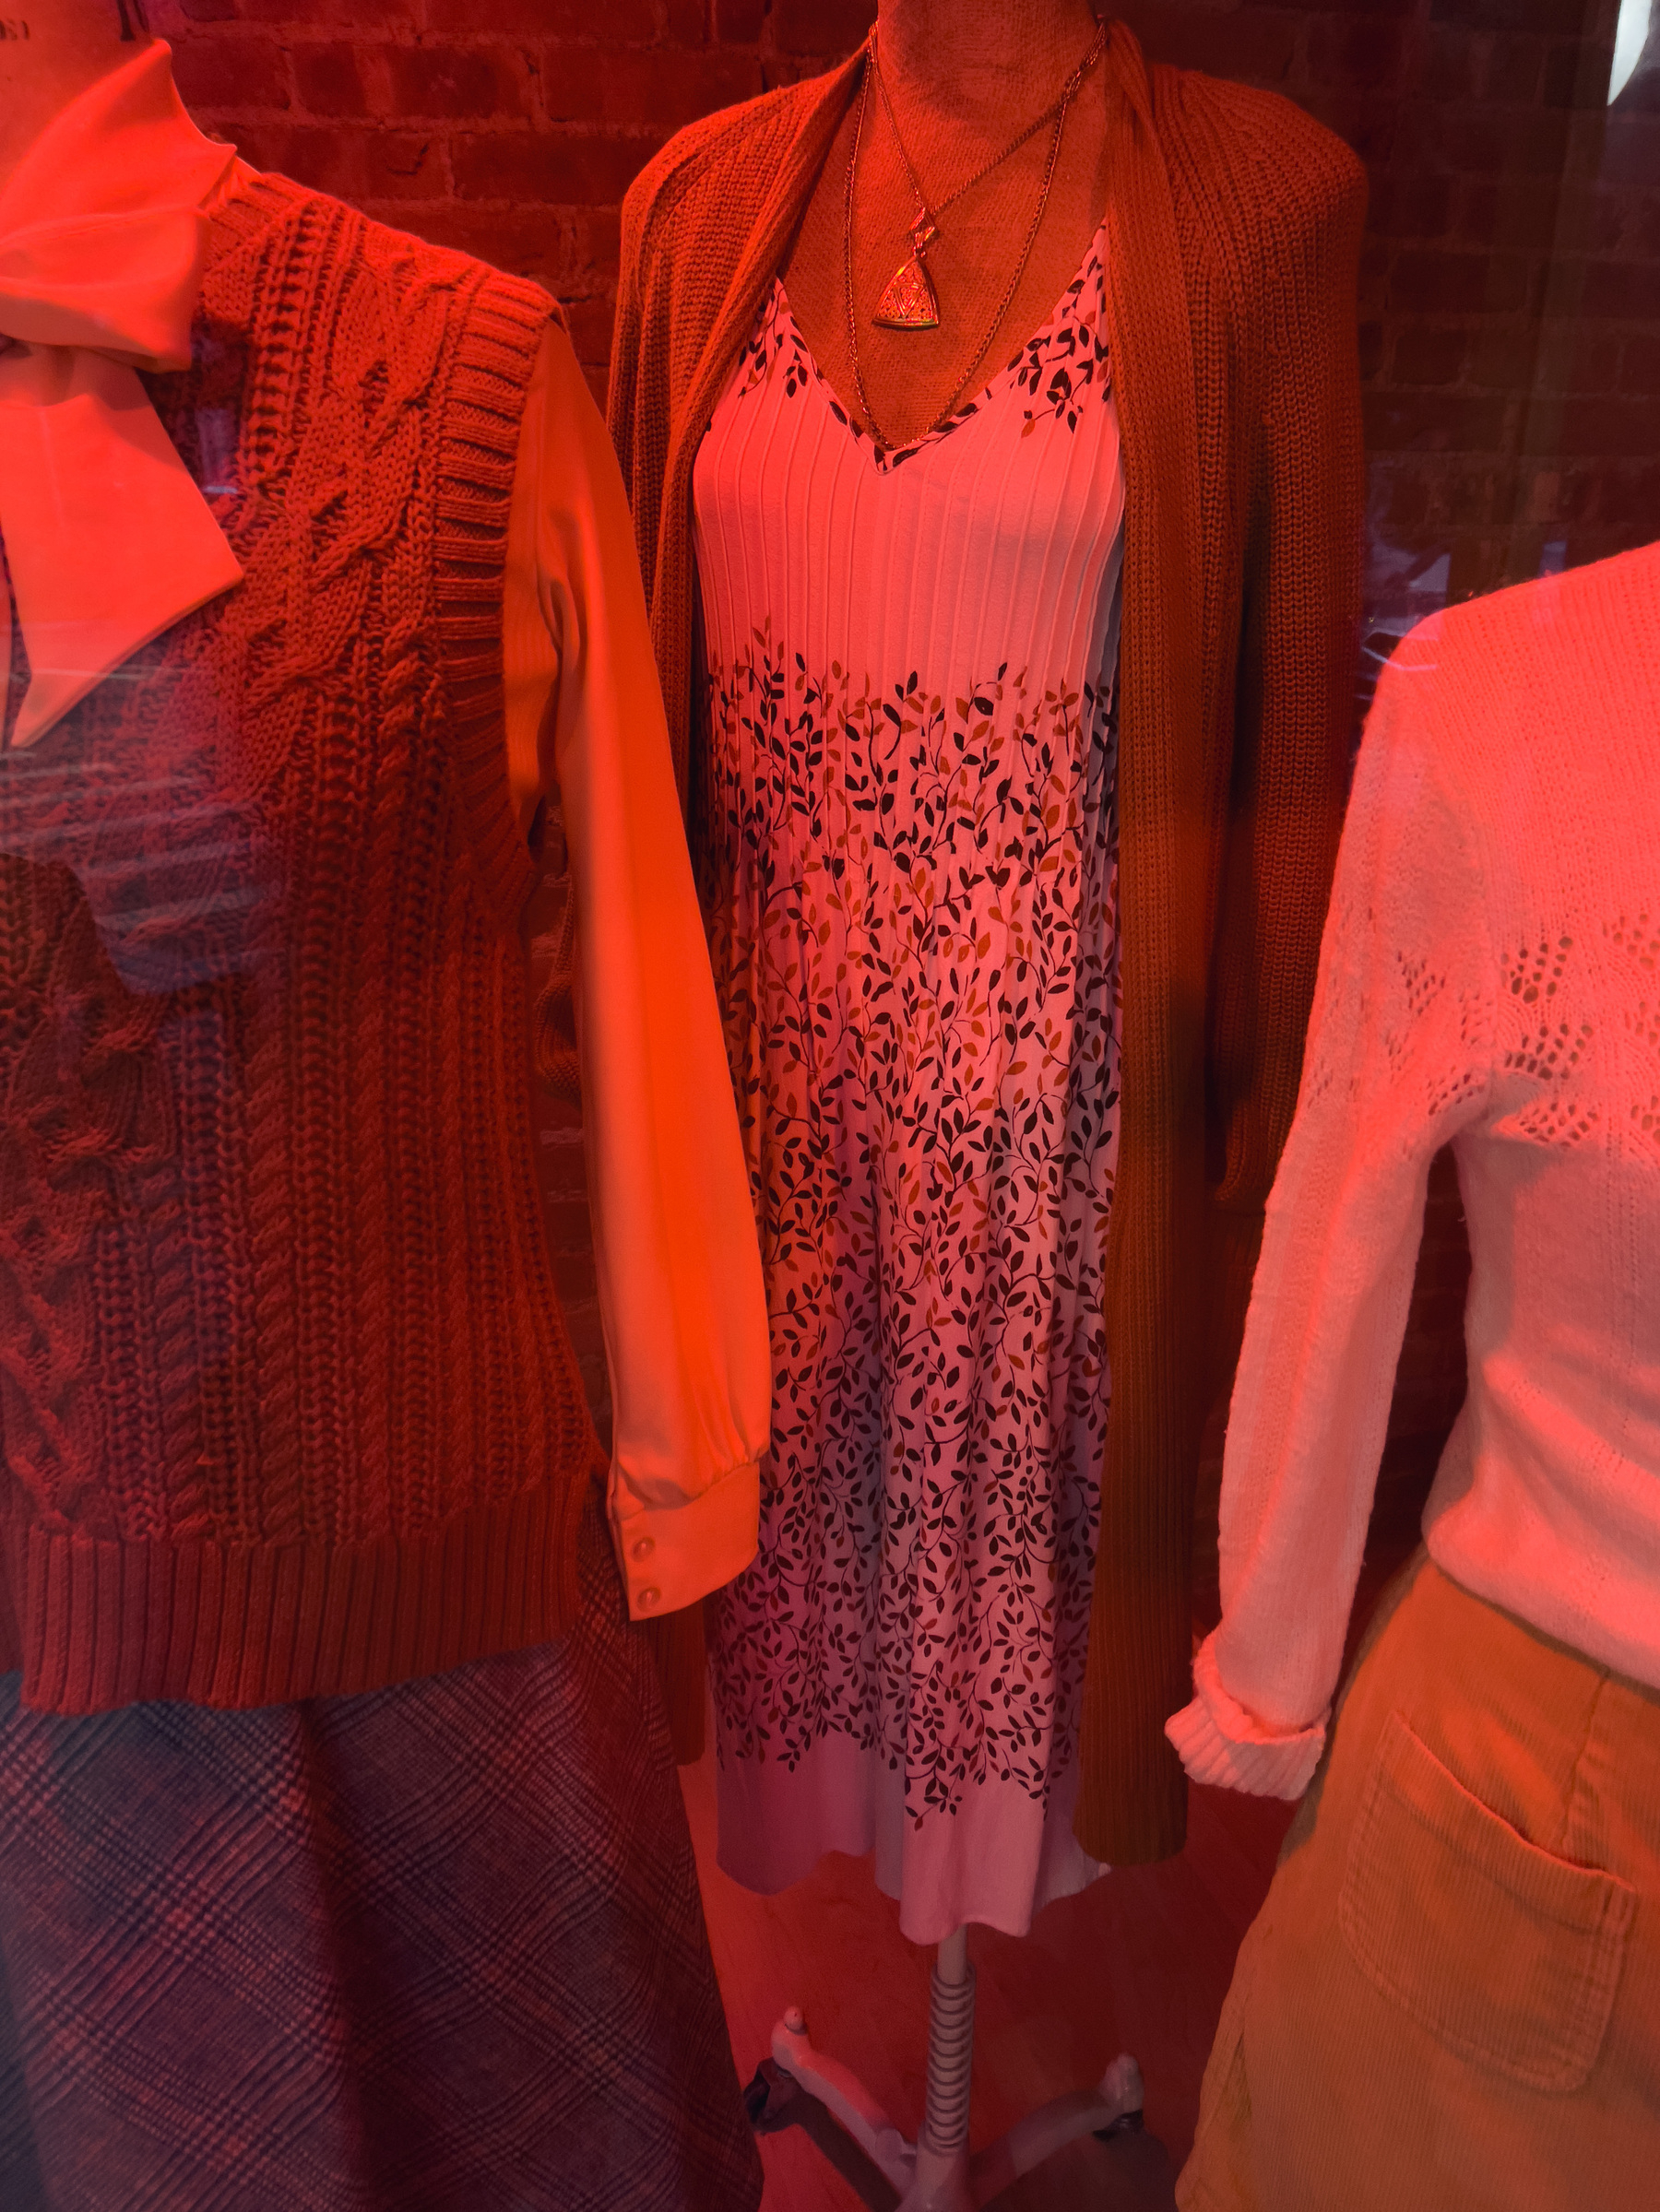 Women’s flower print sundress on mannequin in shop window.